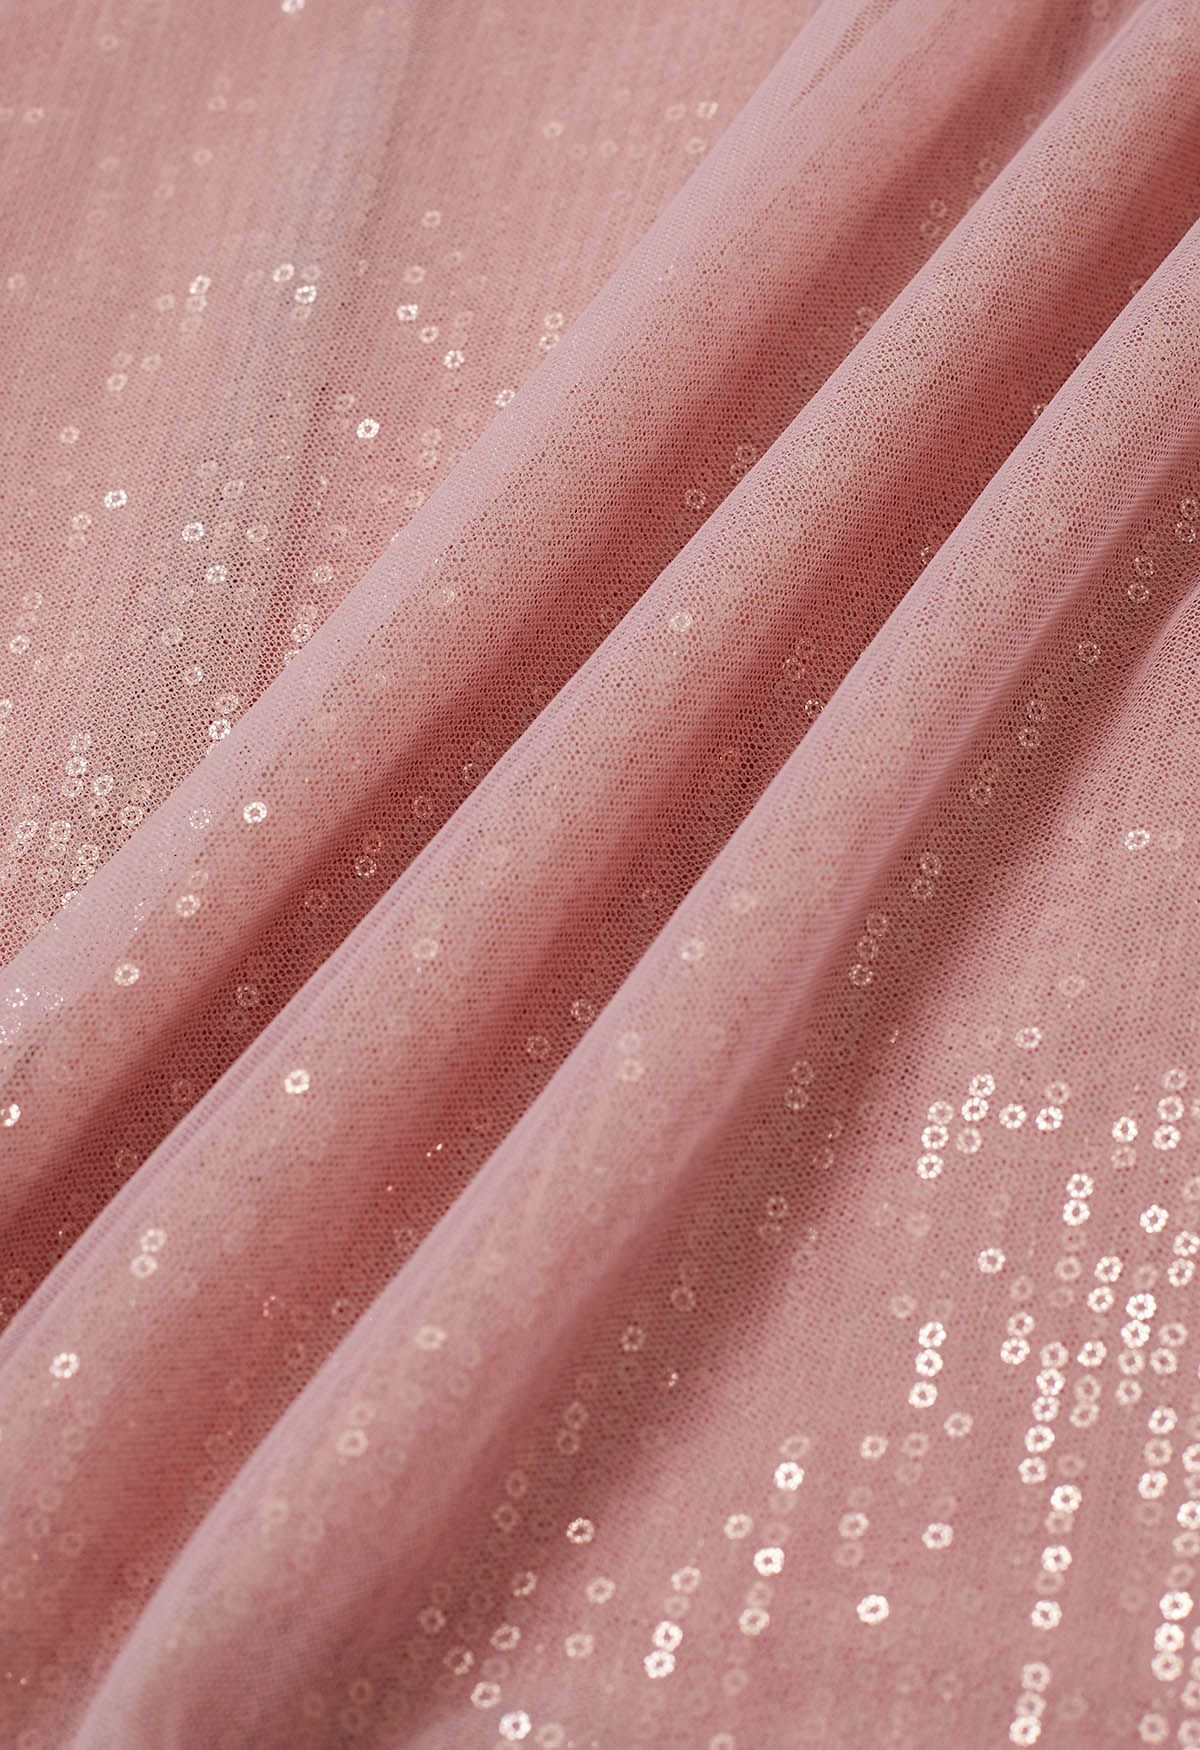 Ravishing Sequins Mesh Tulle Midi Skirt in Pink